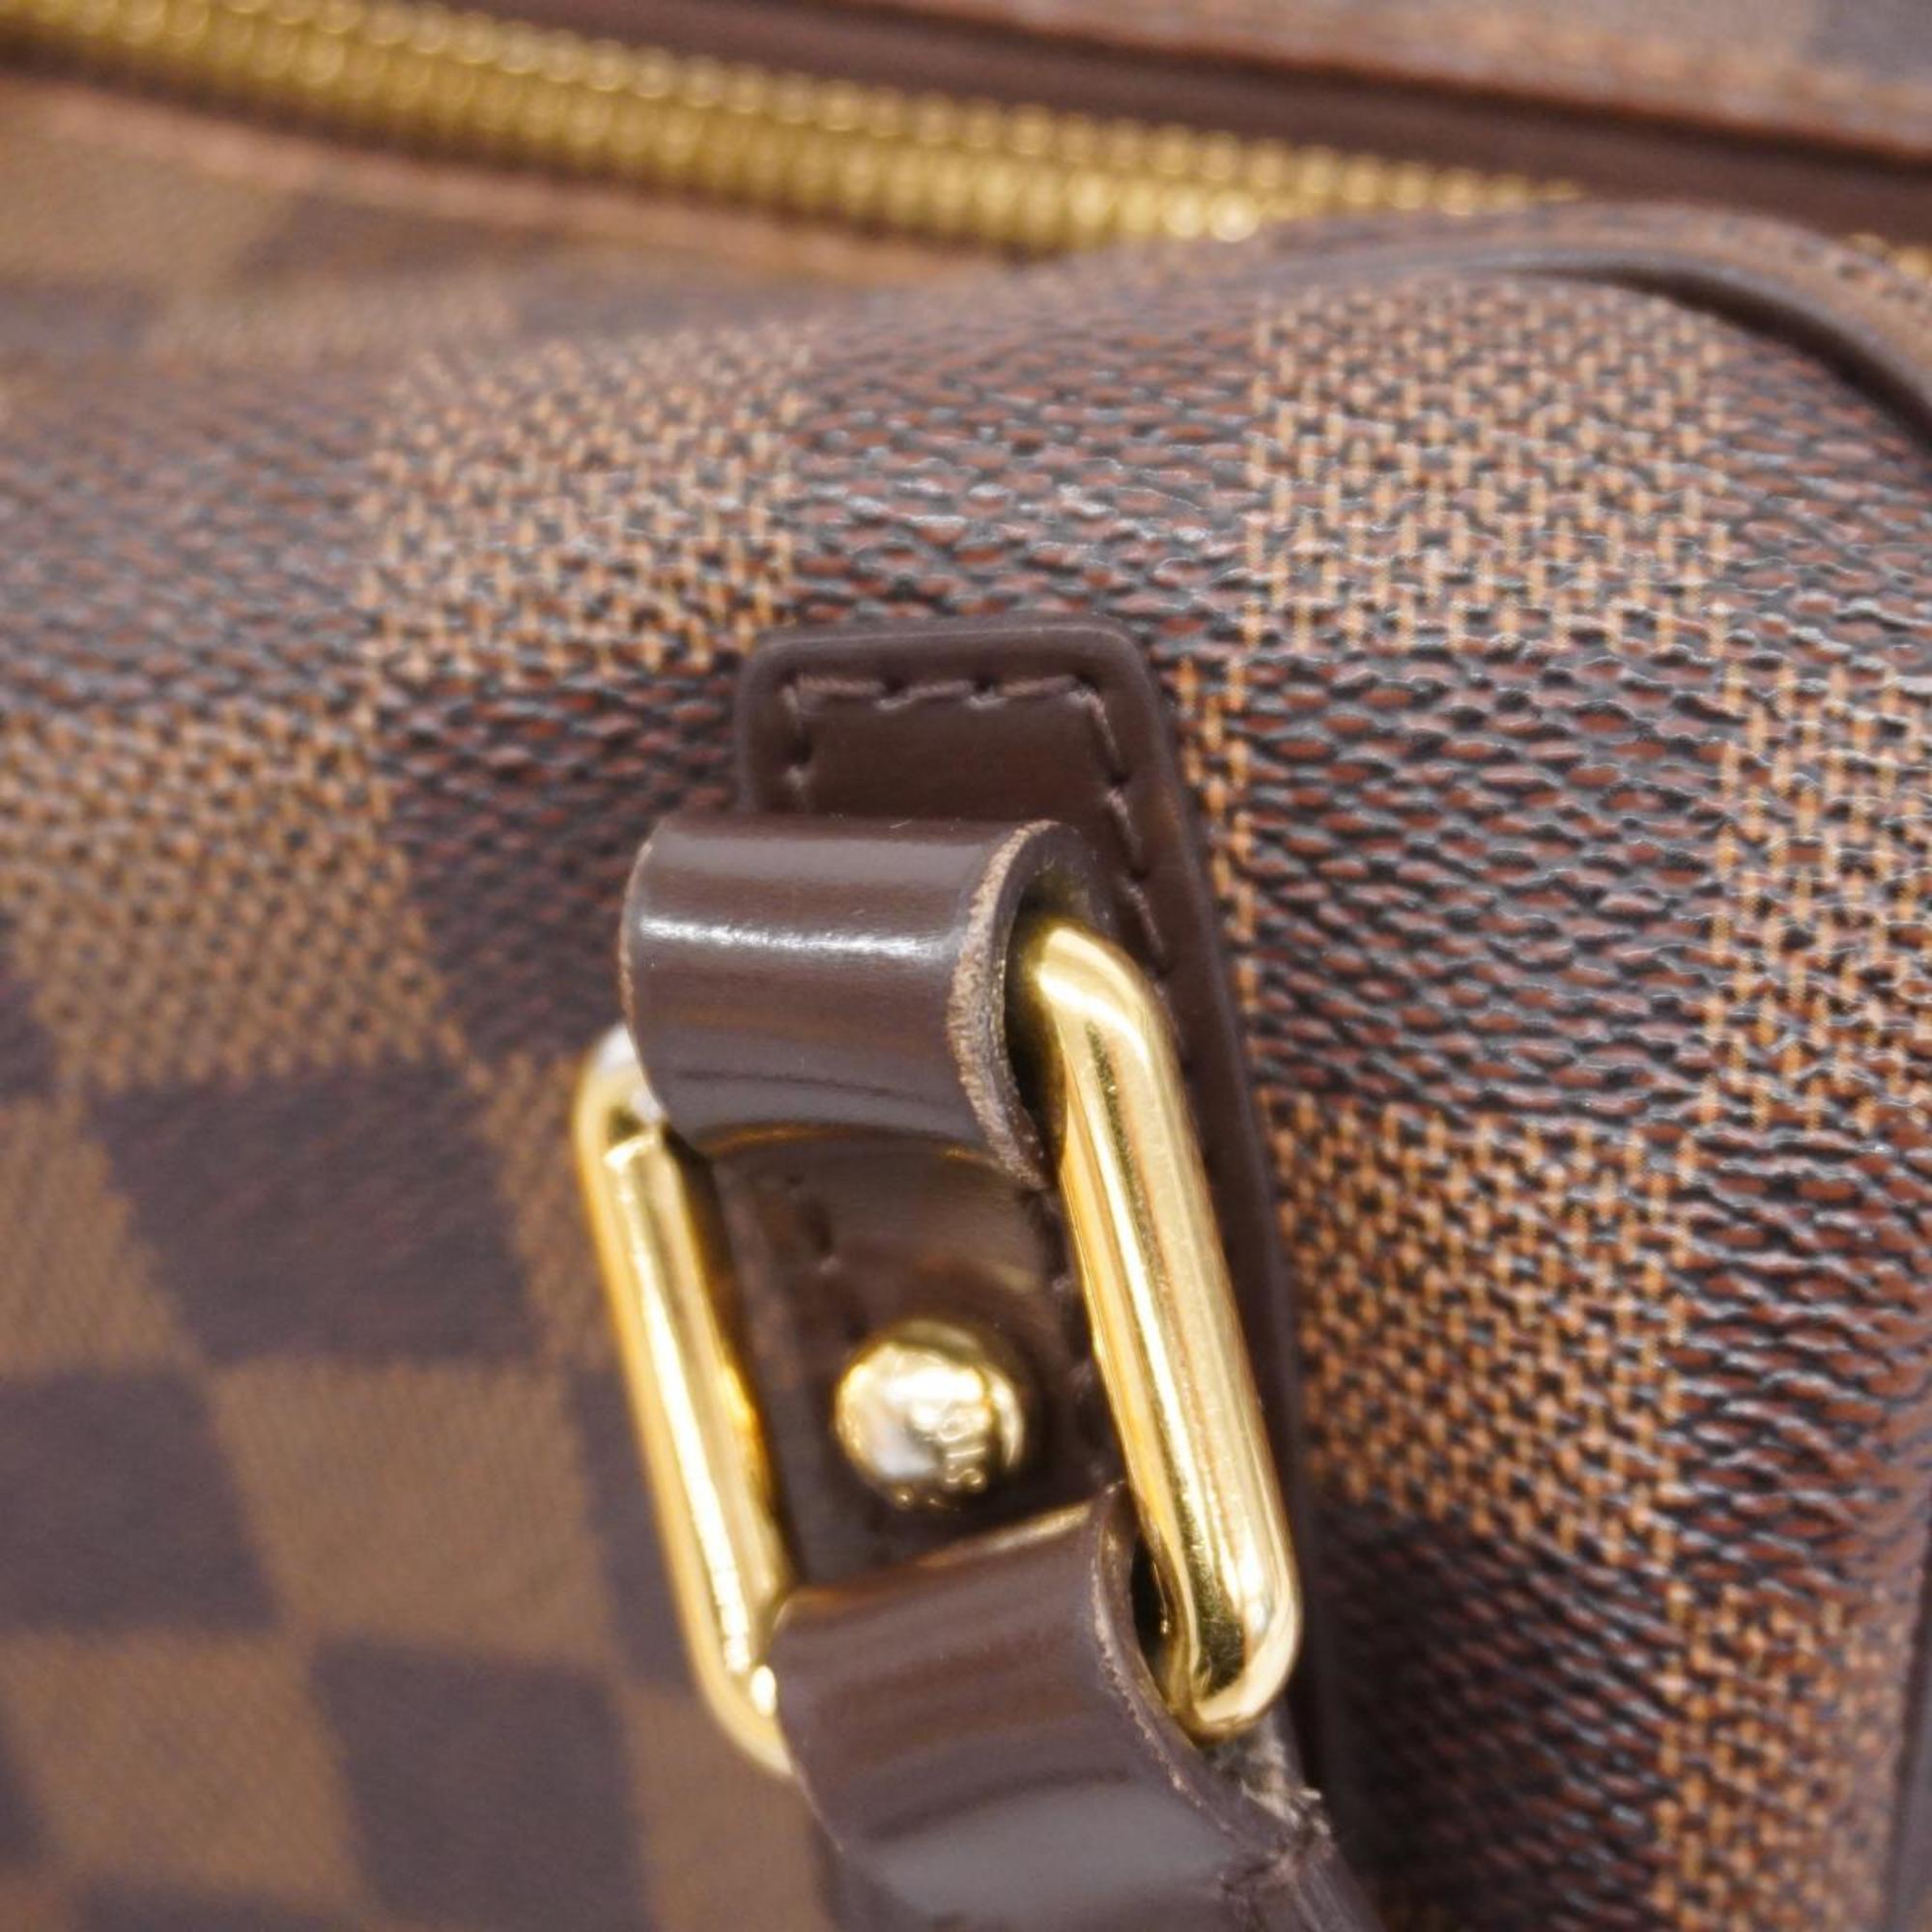 Louis Vuitton Handbag Damier Rivington PM N41157 Ebene Ladies